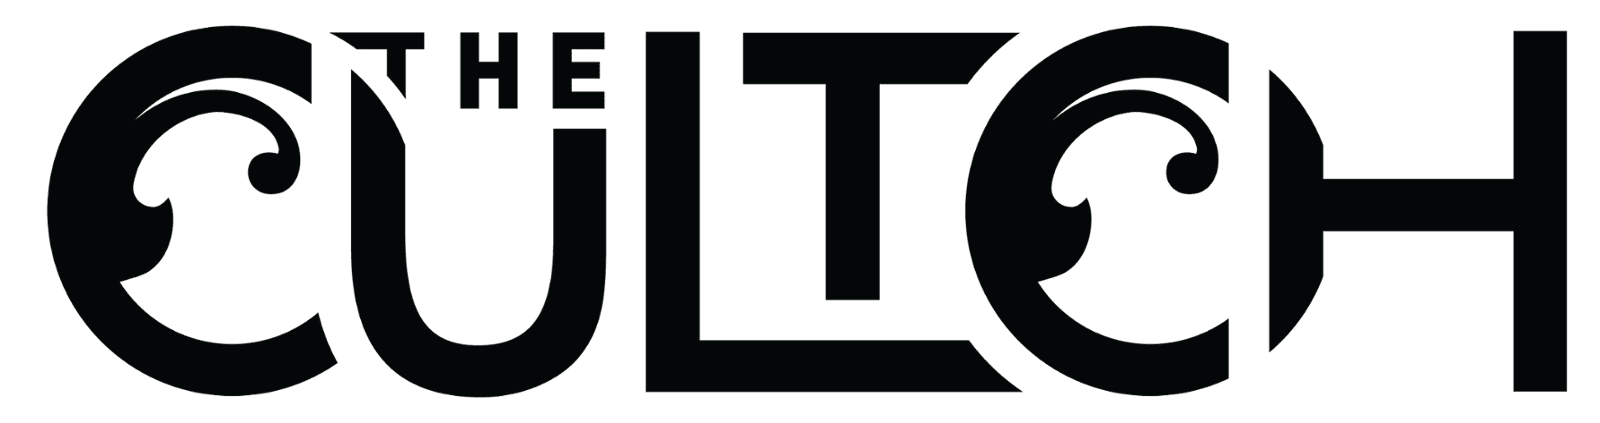 The Cultch logo